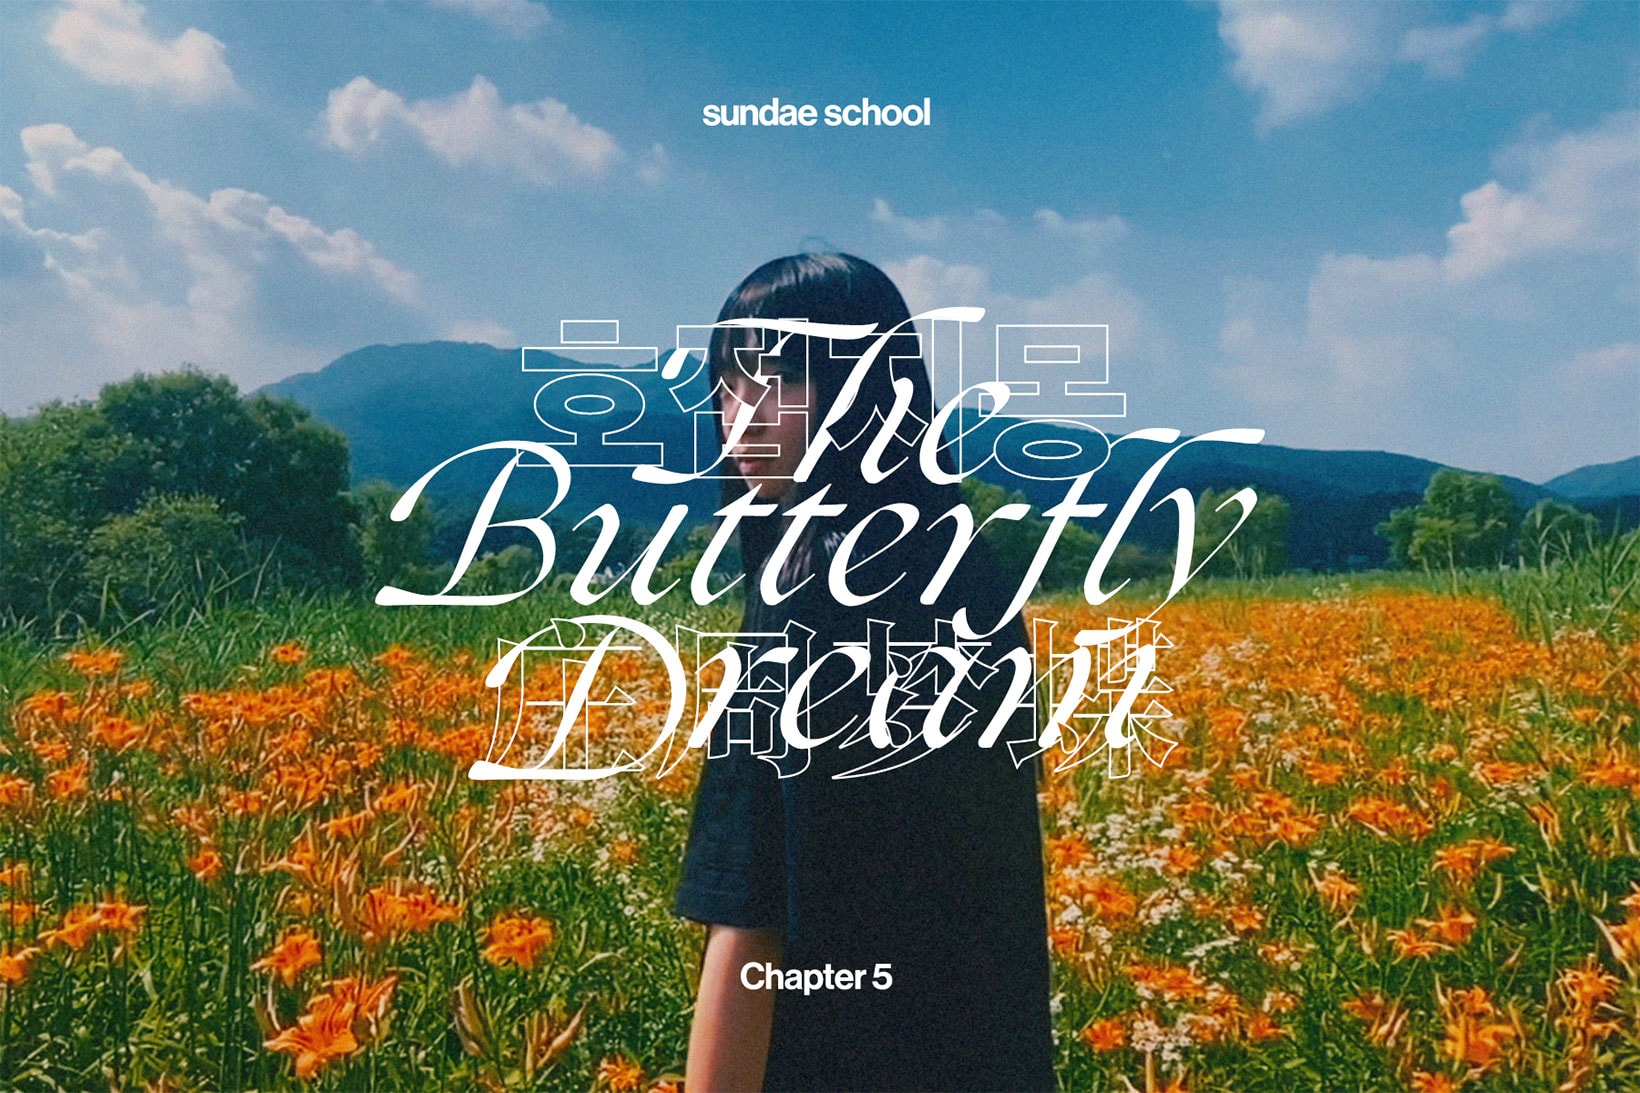 sundae school pre-fall chapter 5 the butterfly dream collection tie-dye hanbok seoul korea